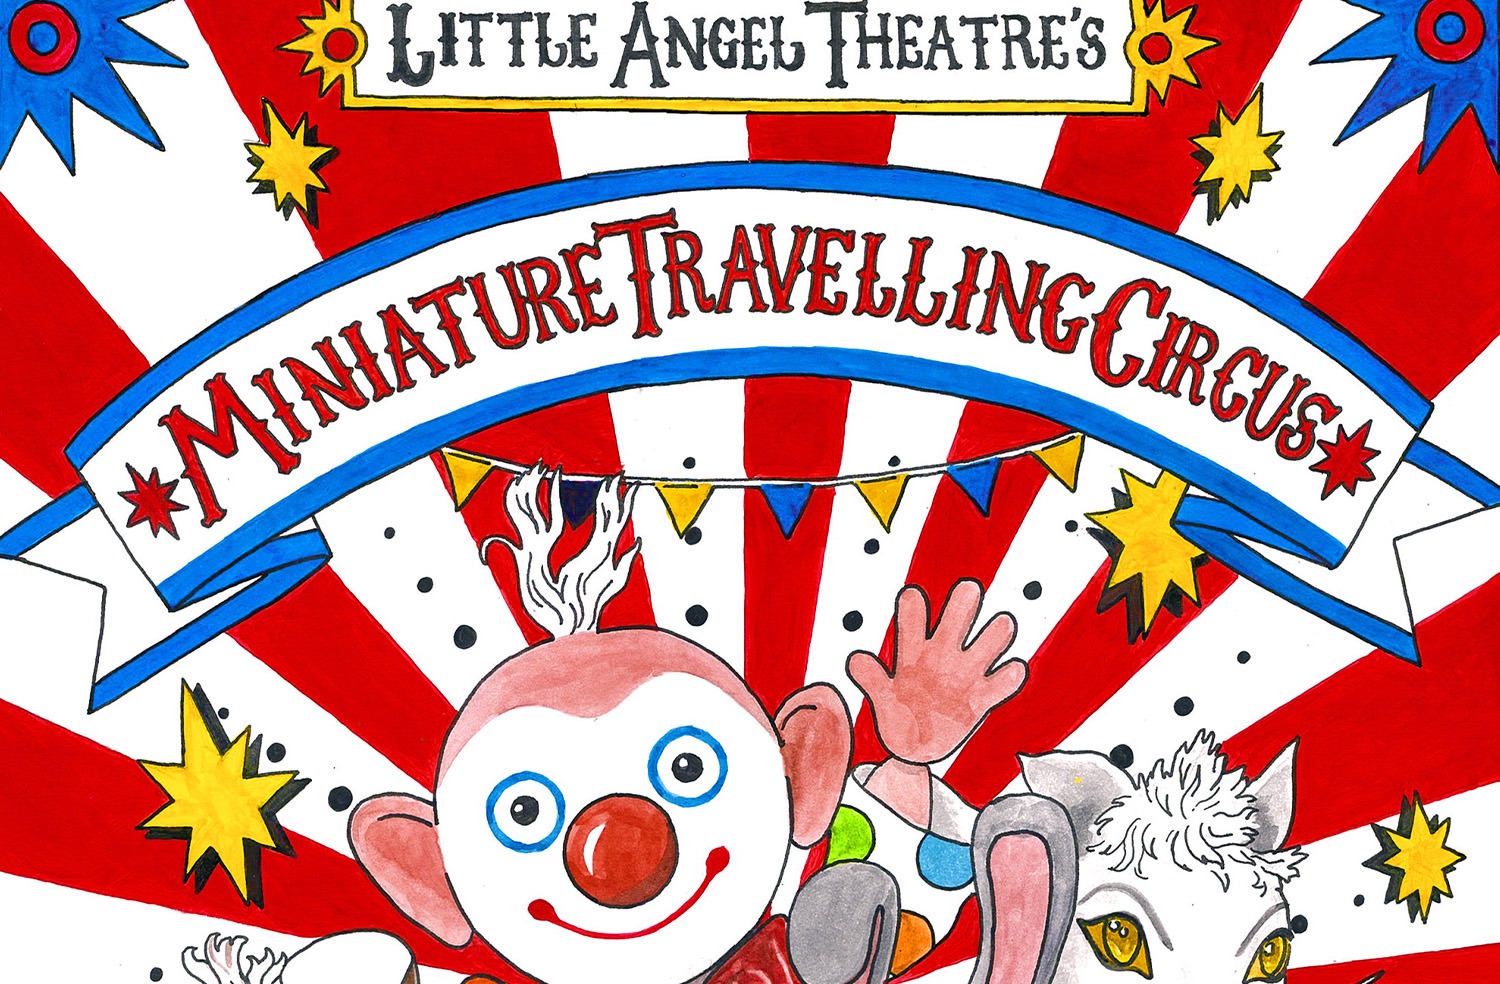 Miniature Travelling Circus